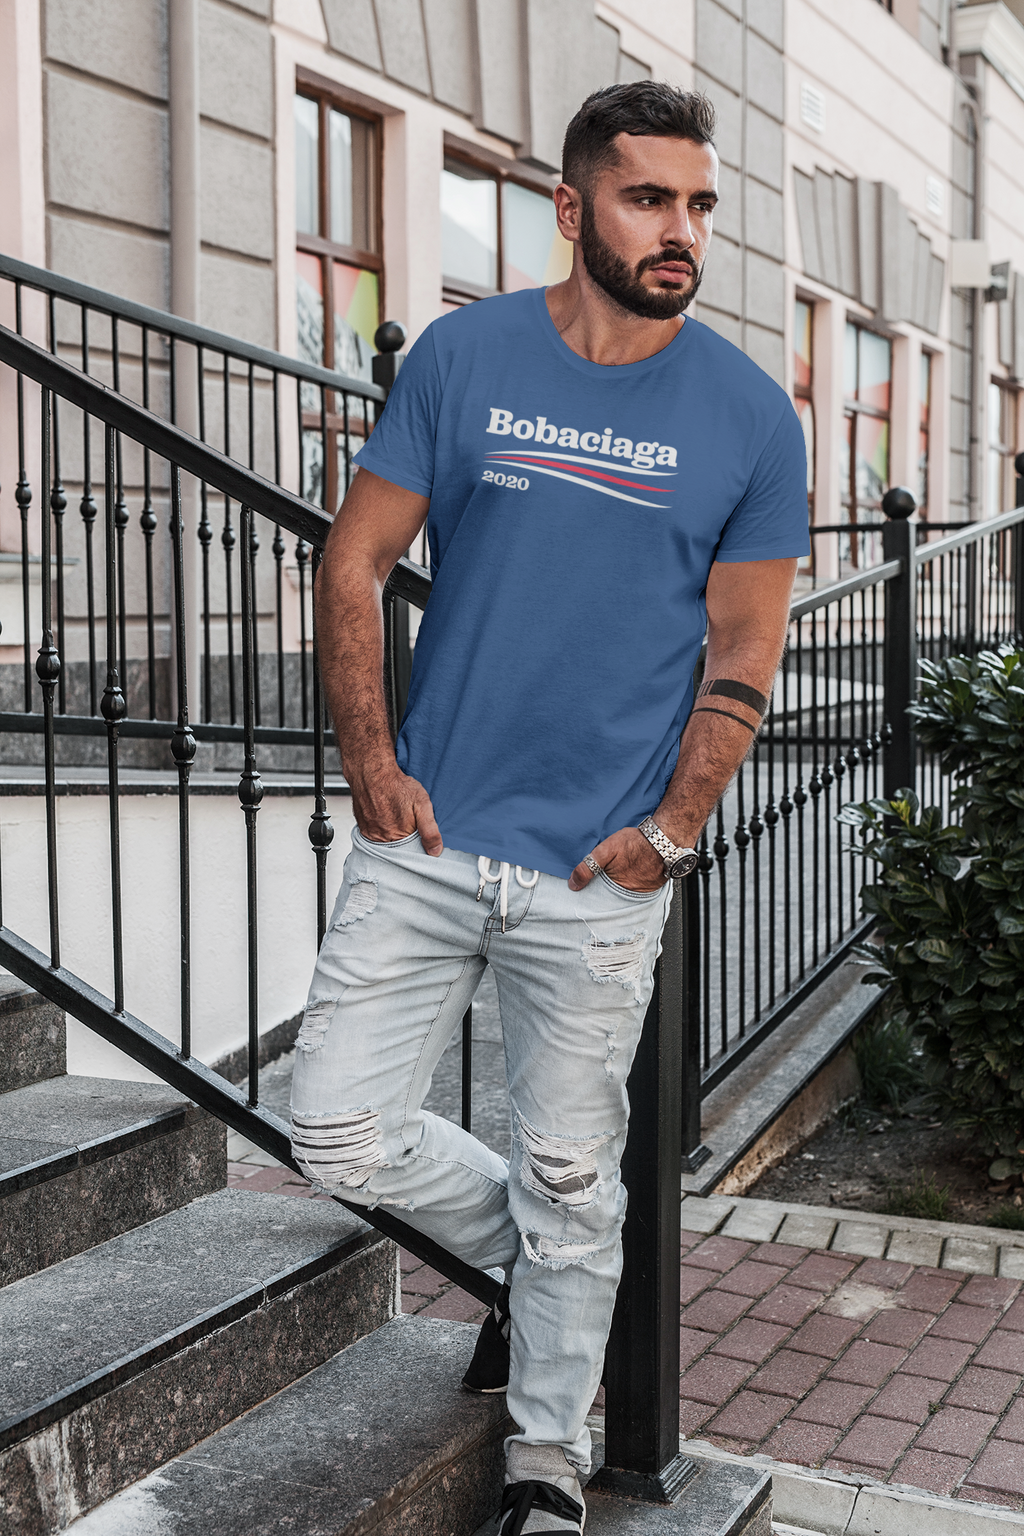 Man wearing Bobaciaga 2020 shirt posing against a fence